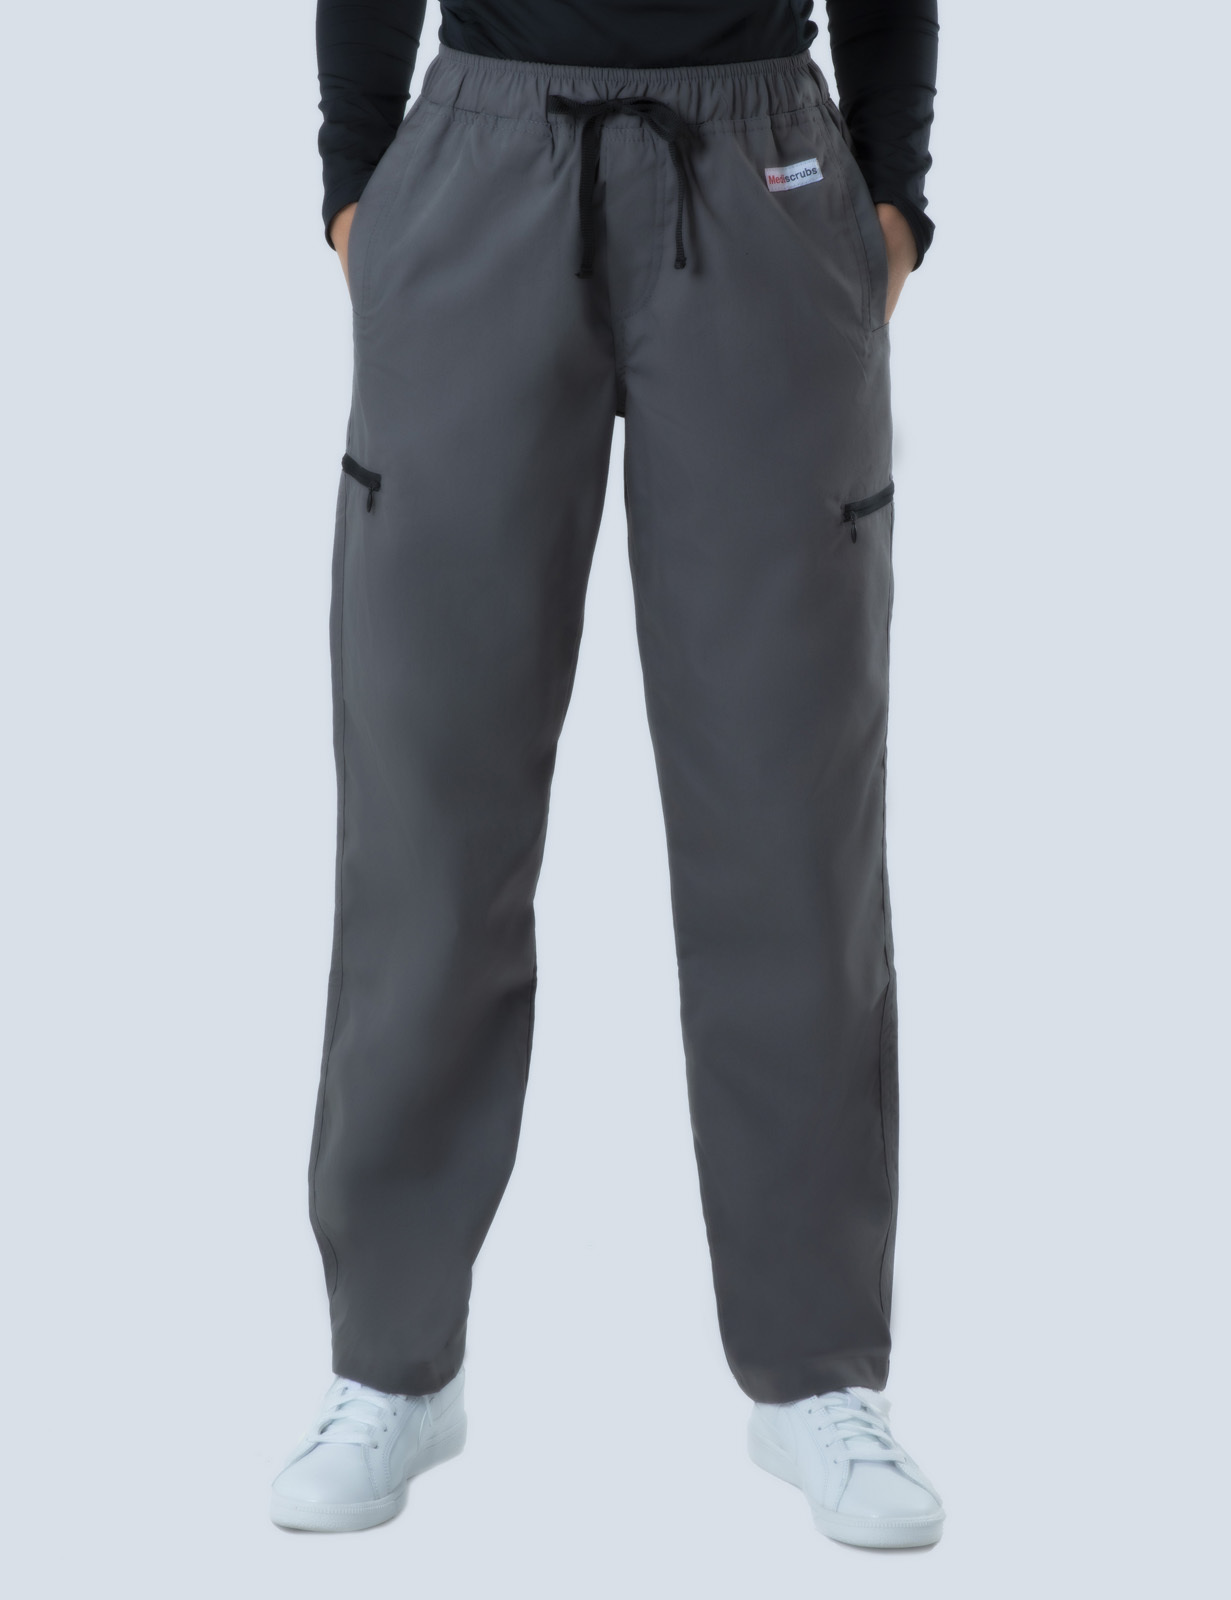 Women's Utility Pants - Steel Grey - 5x Large